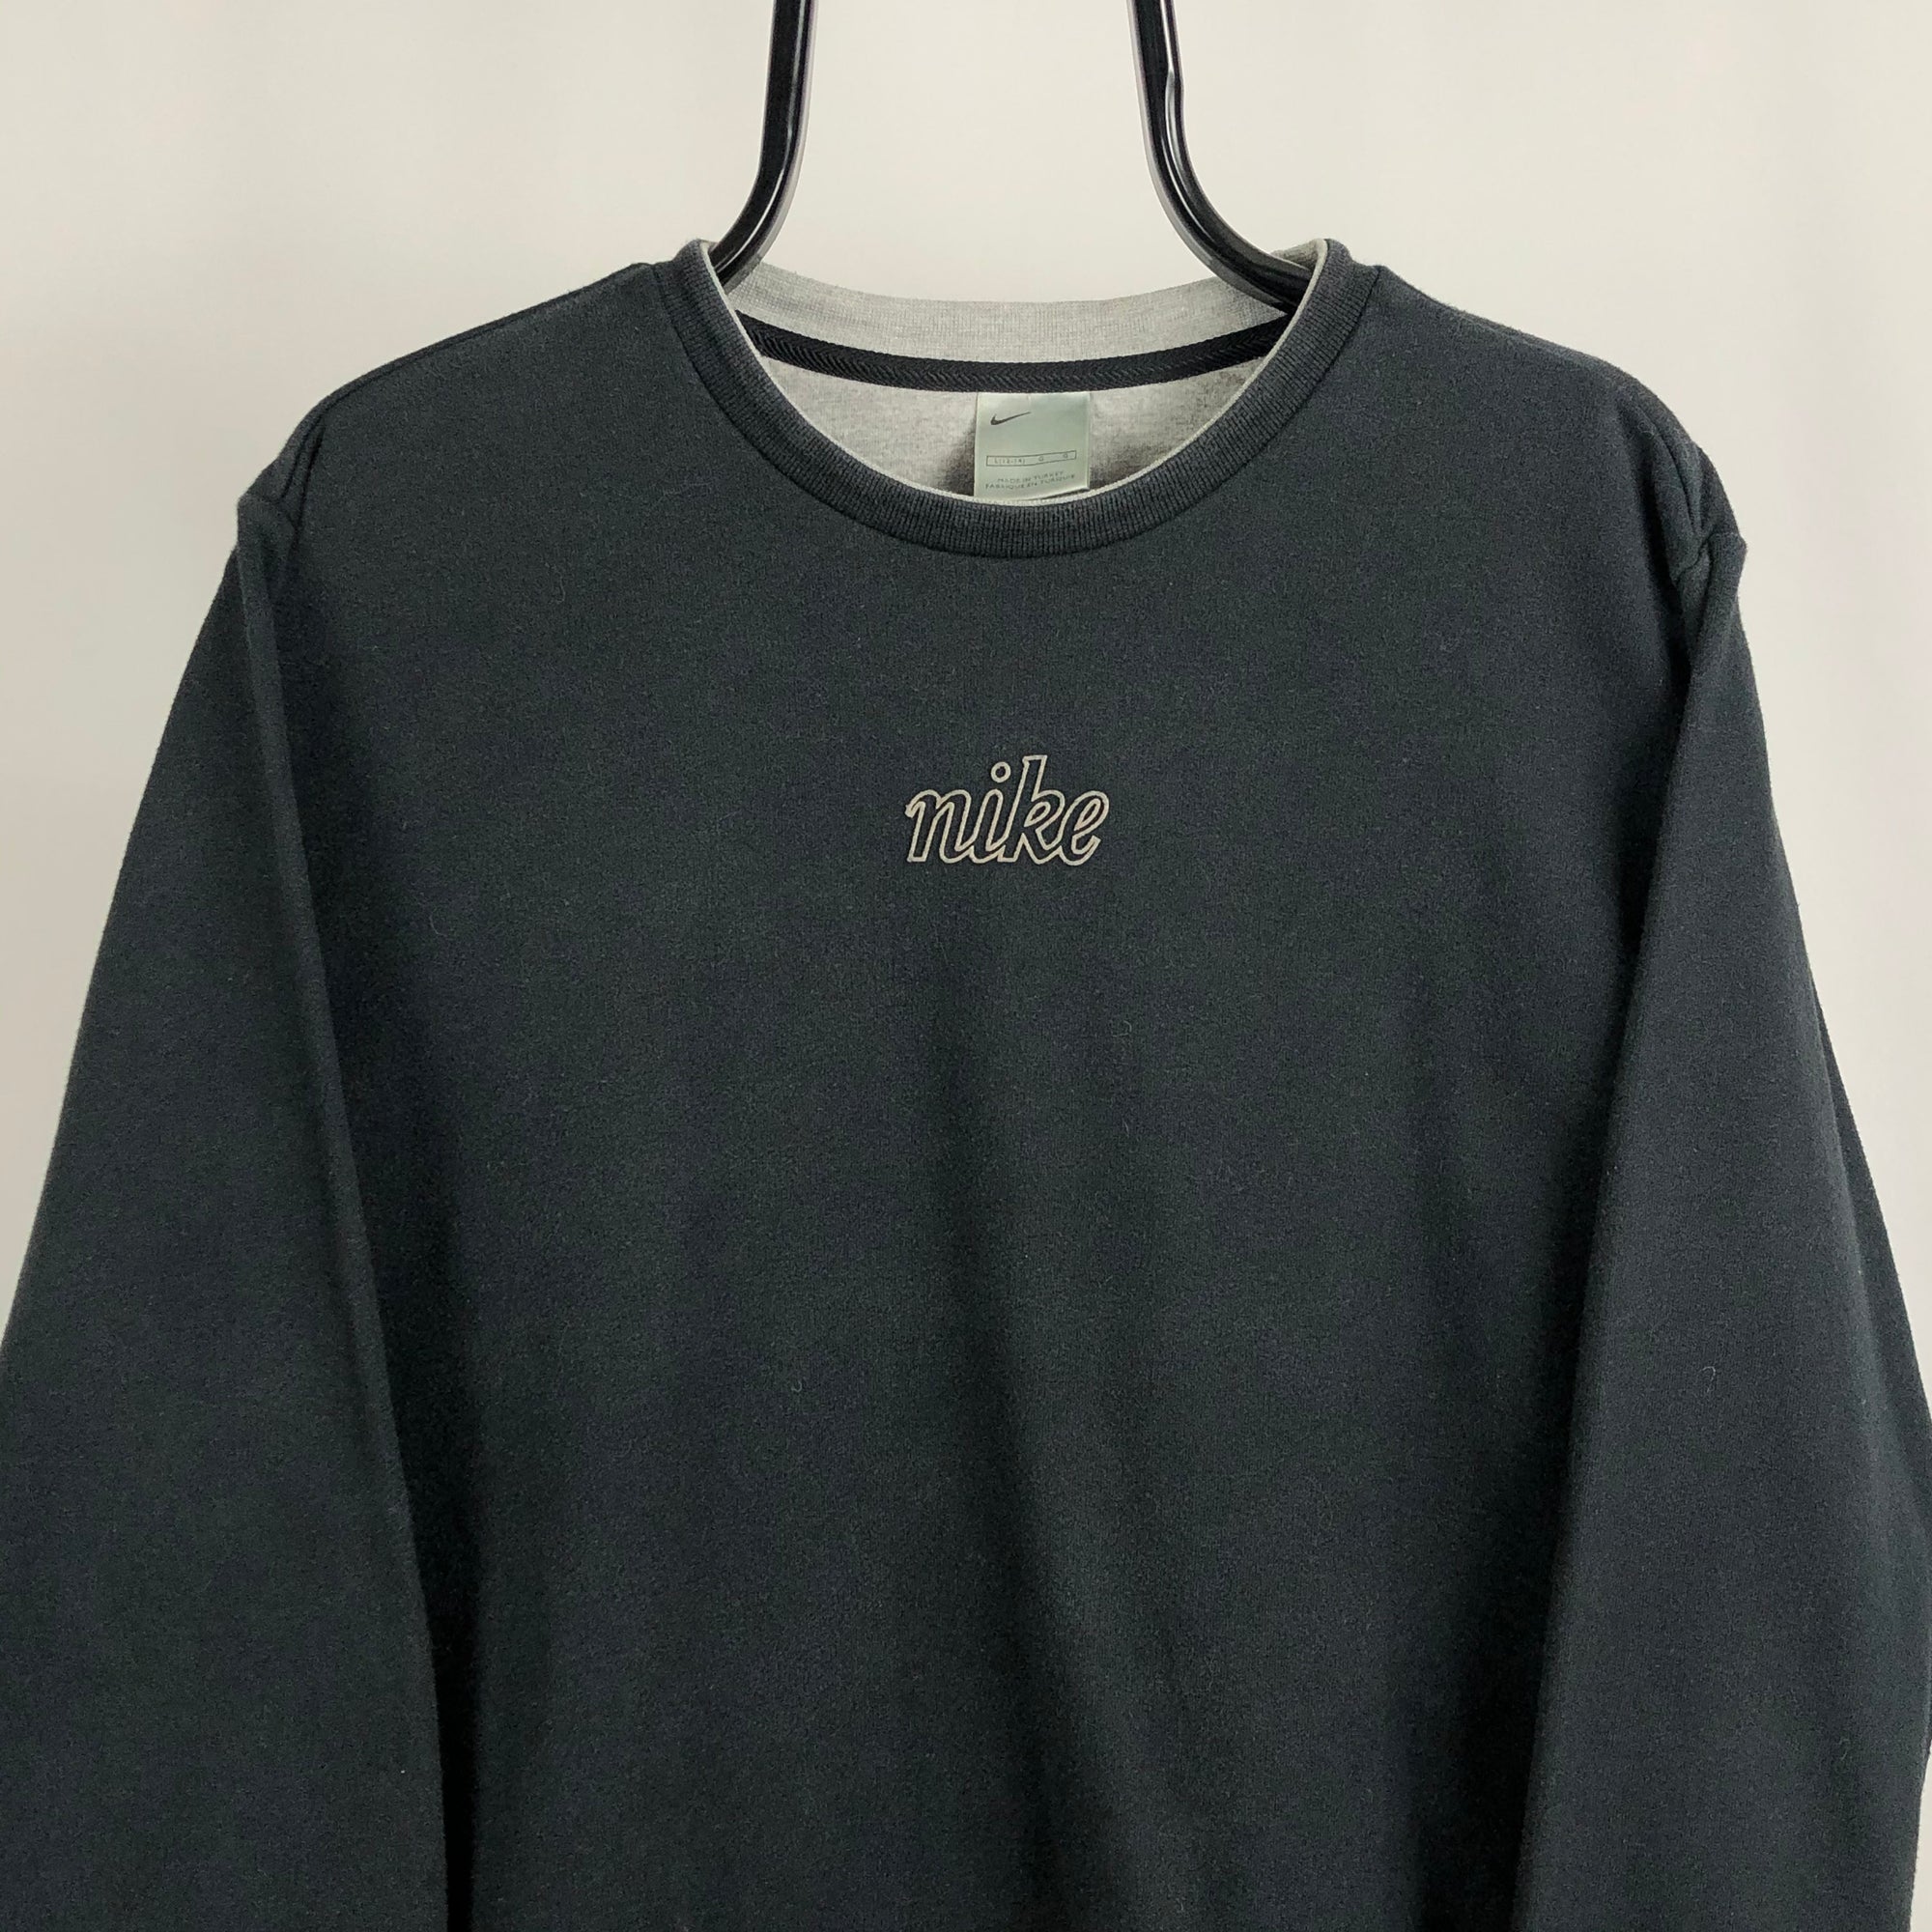 Vintage 00s Nike Spellout Sweatshirt in Black - Men's Medium/Women's Large